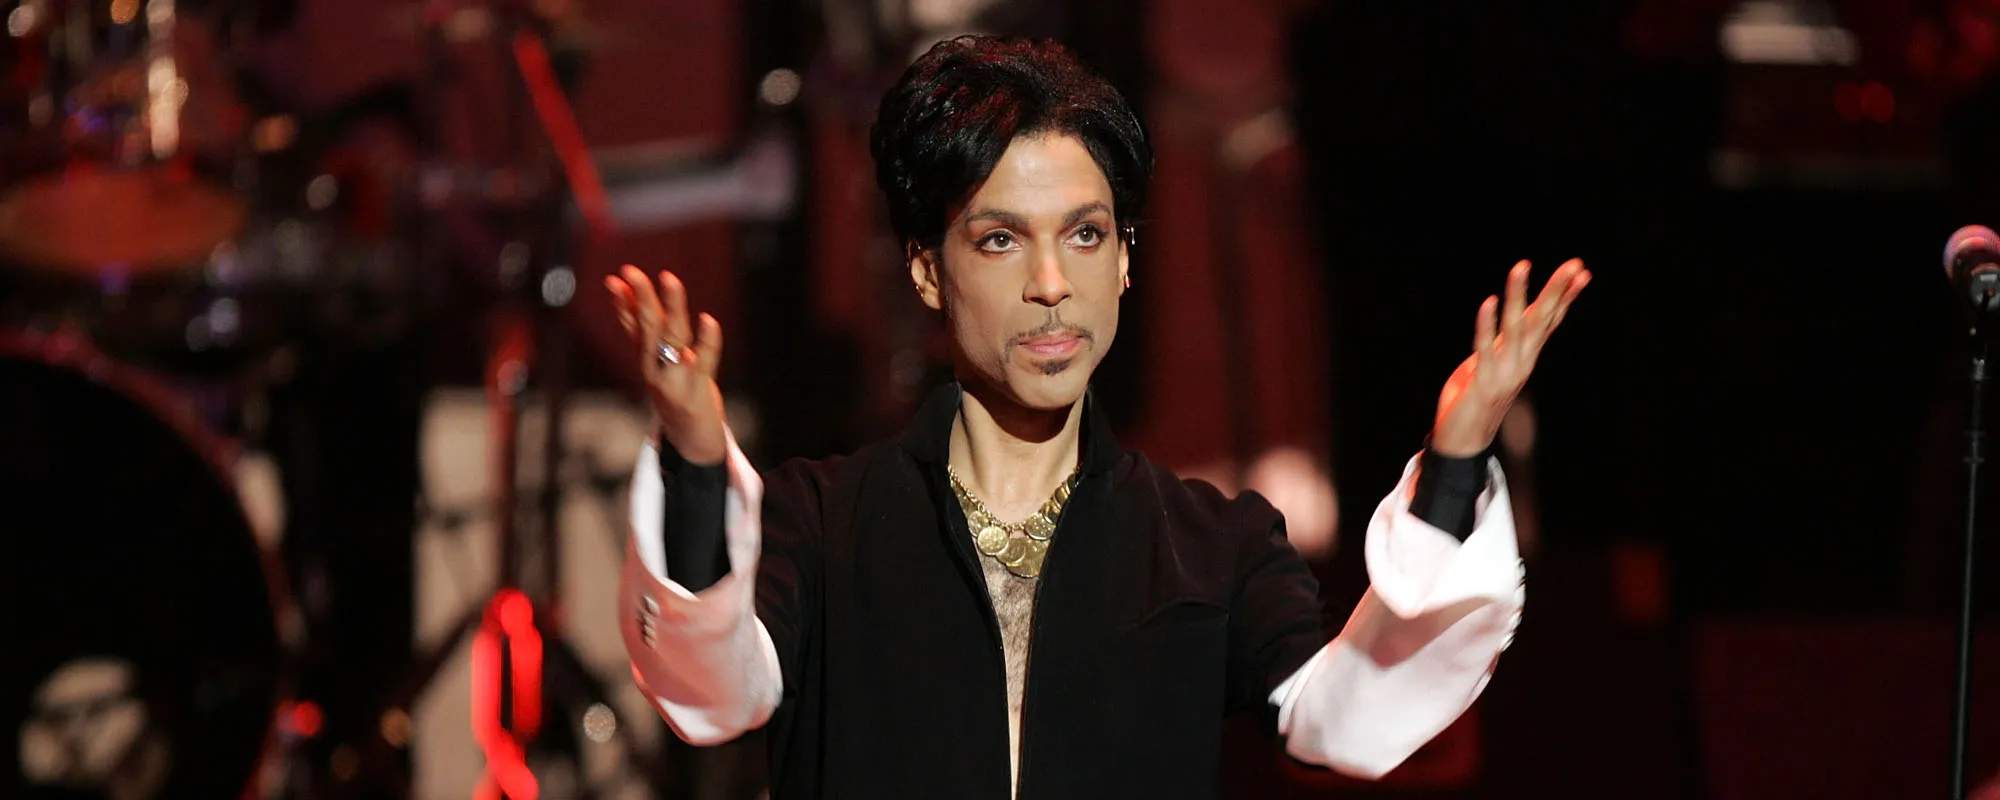 What Do the “Parental Advisory” Lyrics to Prince’s “Darling Nikki” Mean?